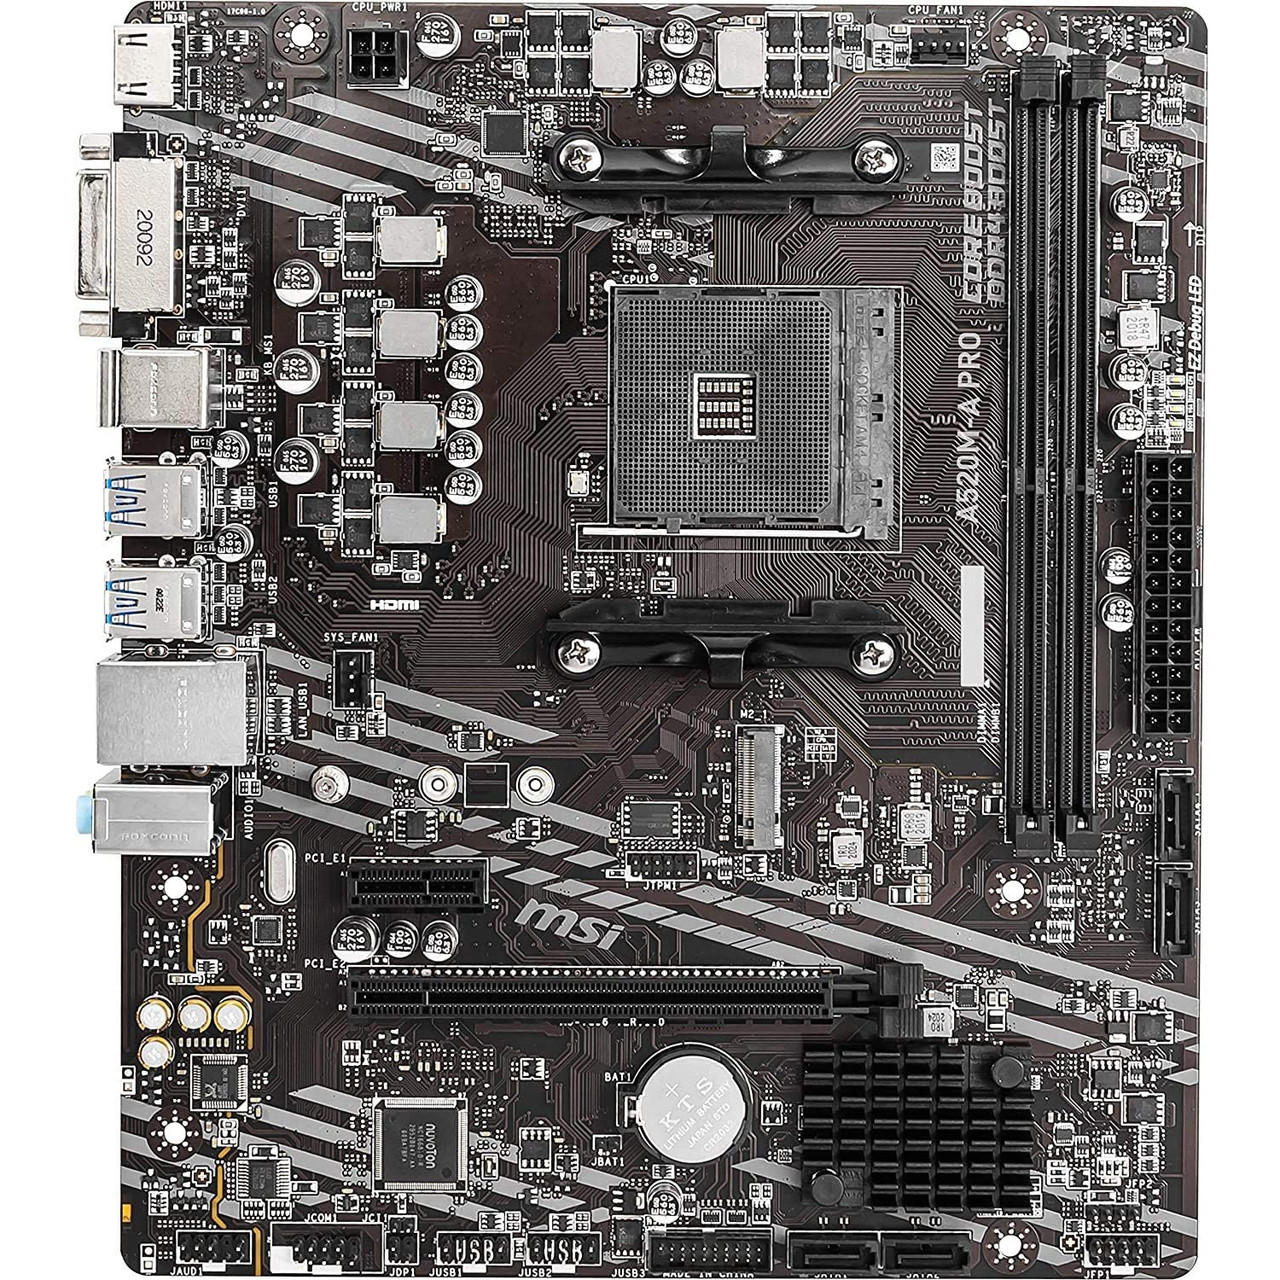 MSI A520M-A PRO AM4 AMD A520 SATA 6Gb/s USB 3.0 Micro ATX AMD Motherboard 